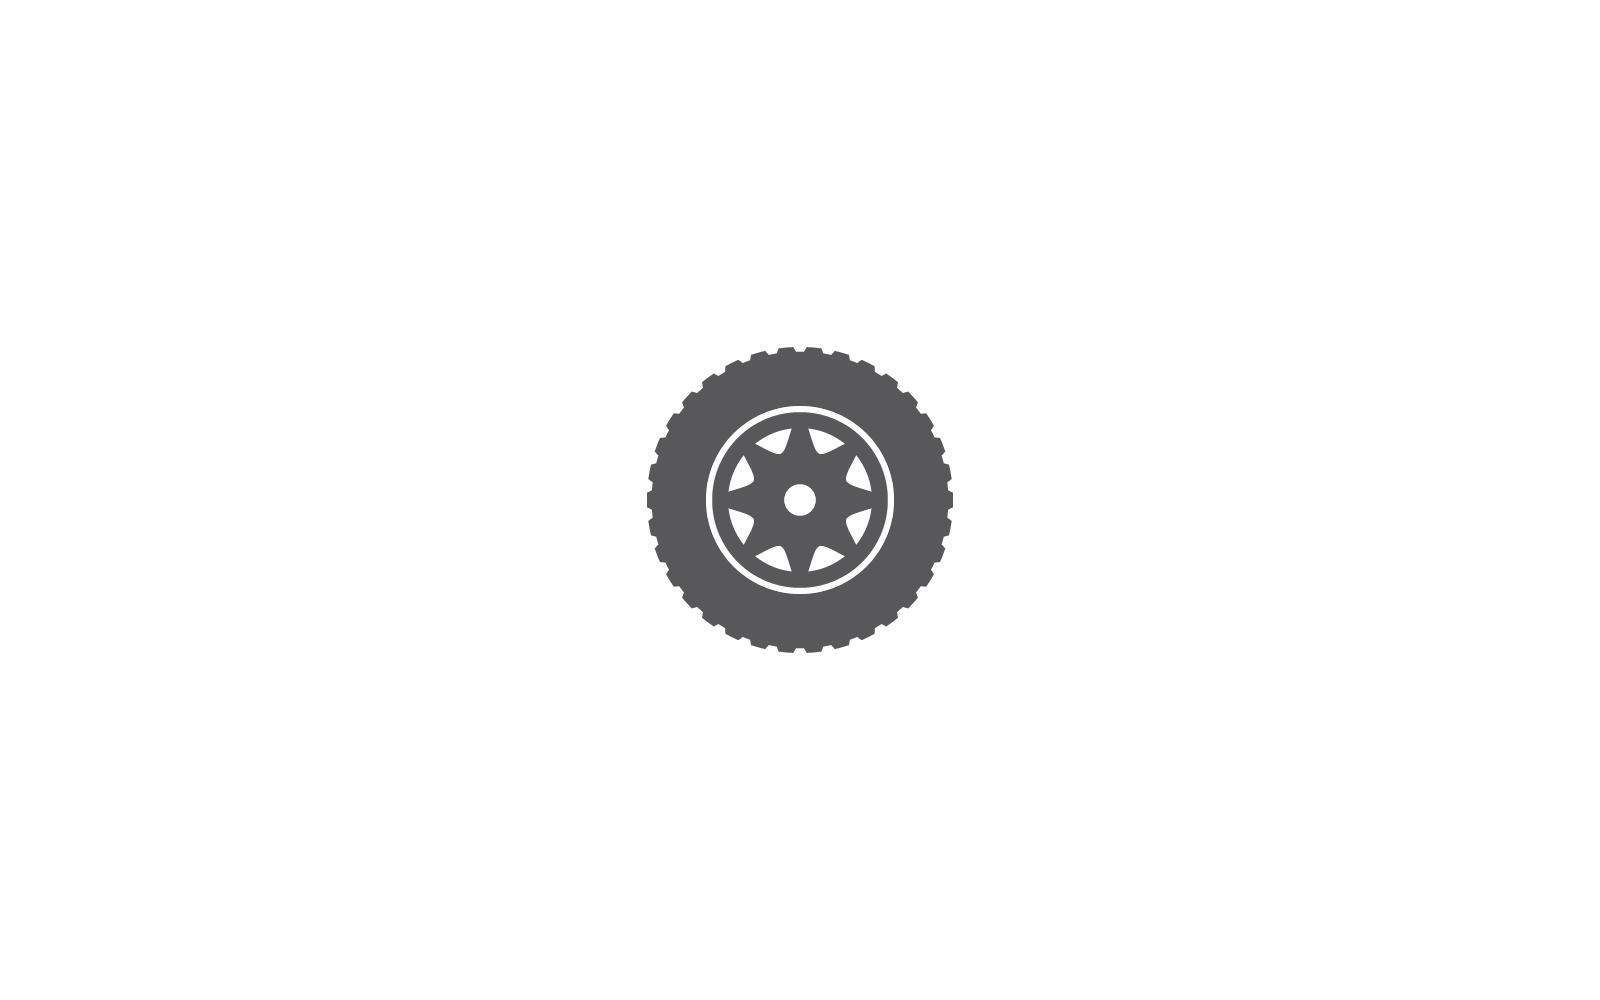 Tires illustration design logo icon vector template